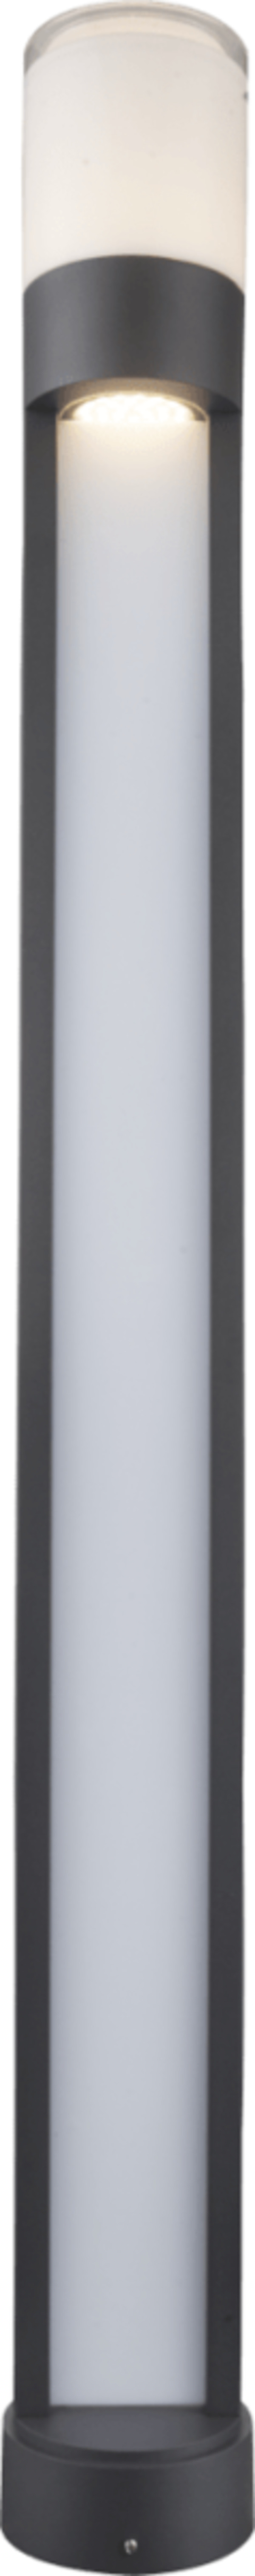 Bild 1 von Globo Lighting - NEXA - Außenleuchte Aluminium Druckguss grau, LED